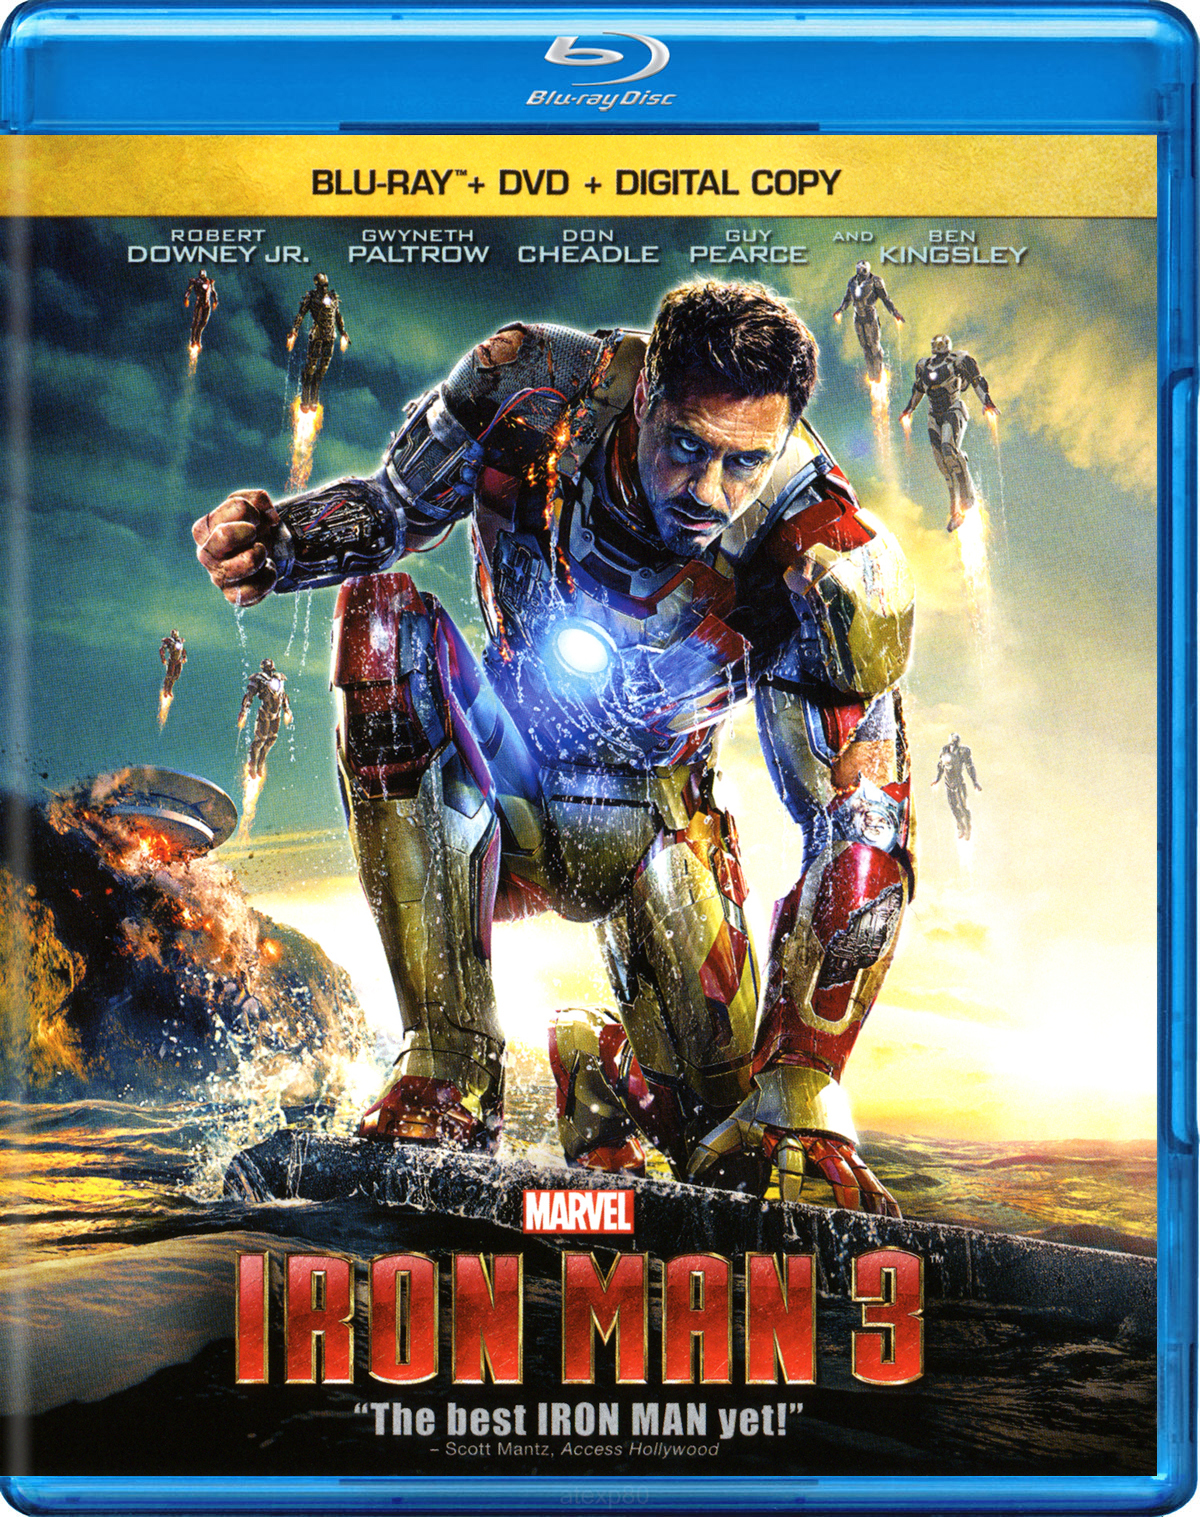 Iron Man 3 Full Movie In Hindi Online Torrent Download - websitesfasr